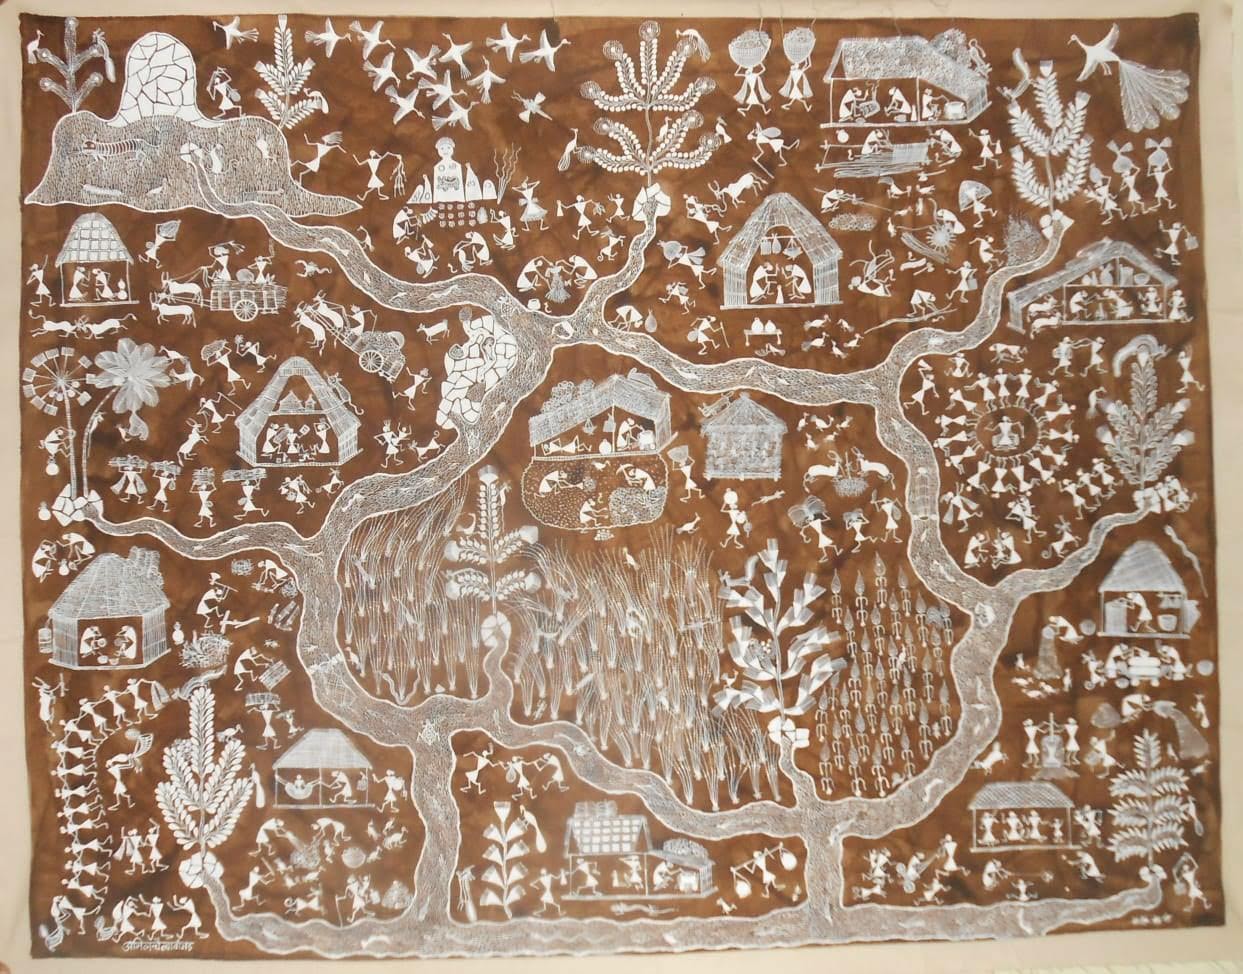 Warli Art Tribal Art of India | History of Warli Paintings ...